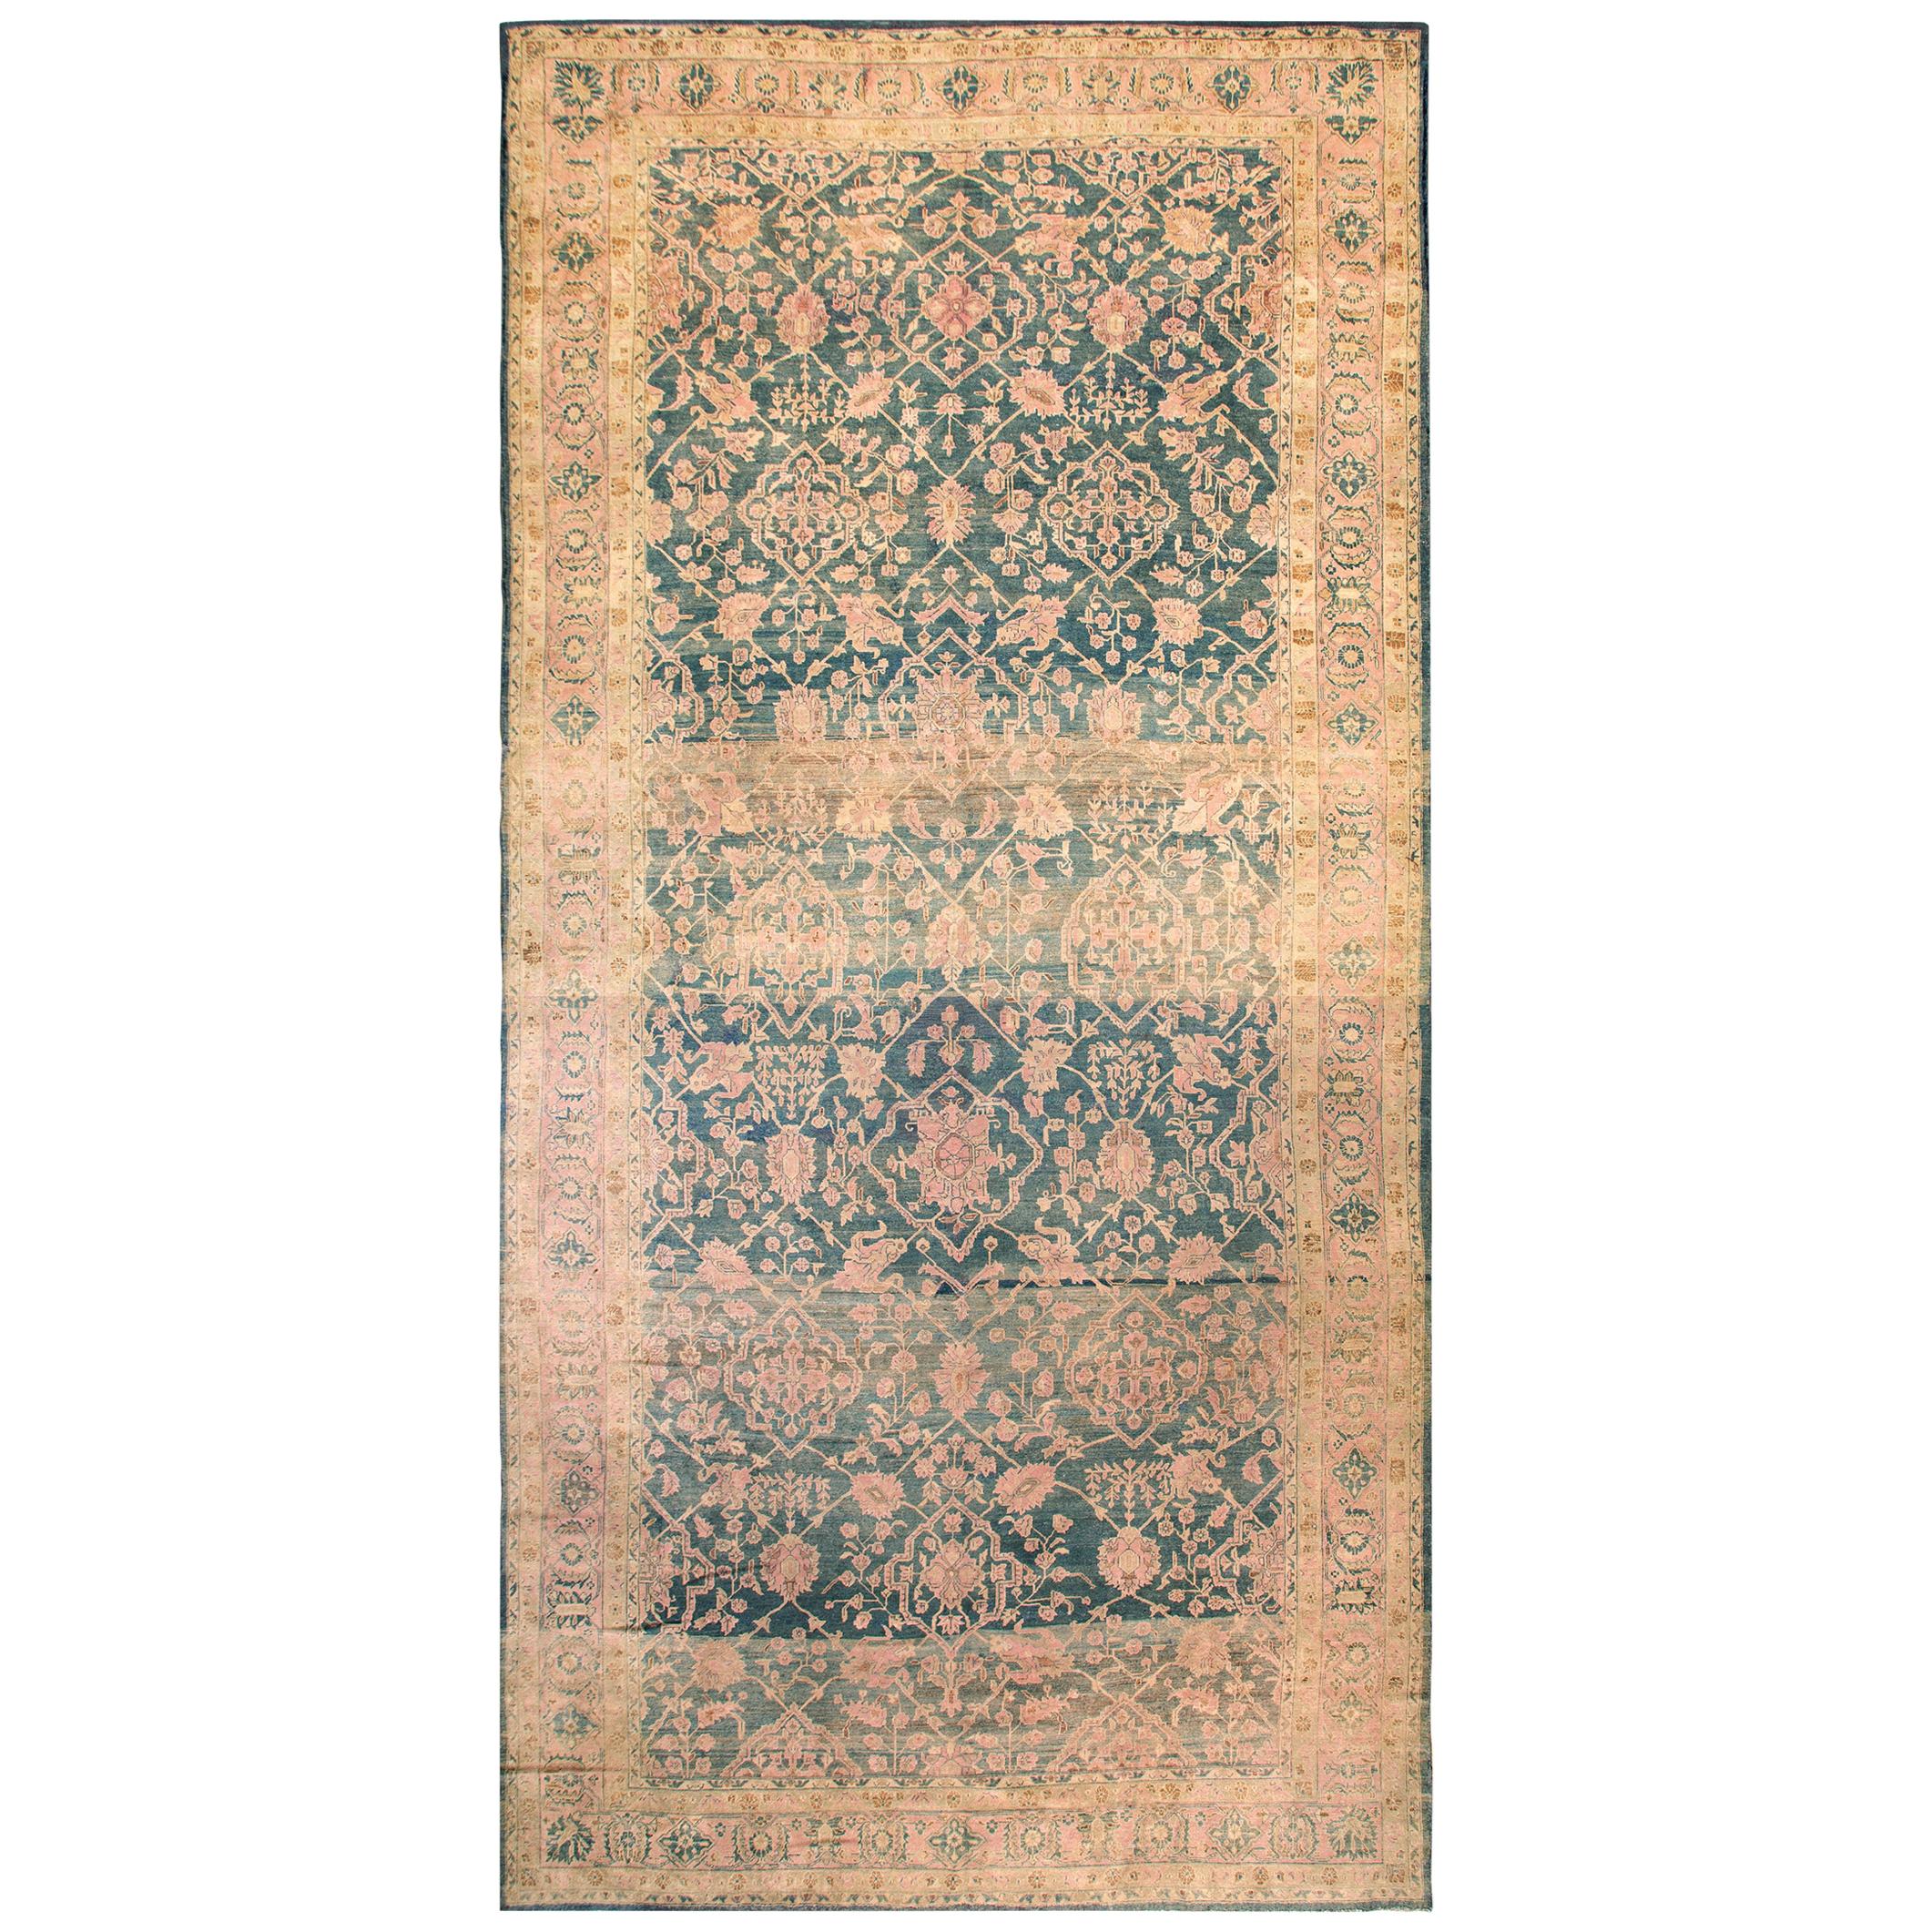 Early 20th Century Persian Malayer Carpet ( 10' x 21'4" - 305 x 650 )